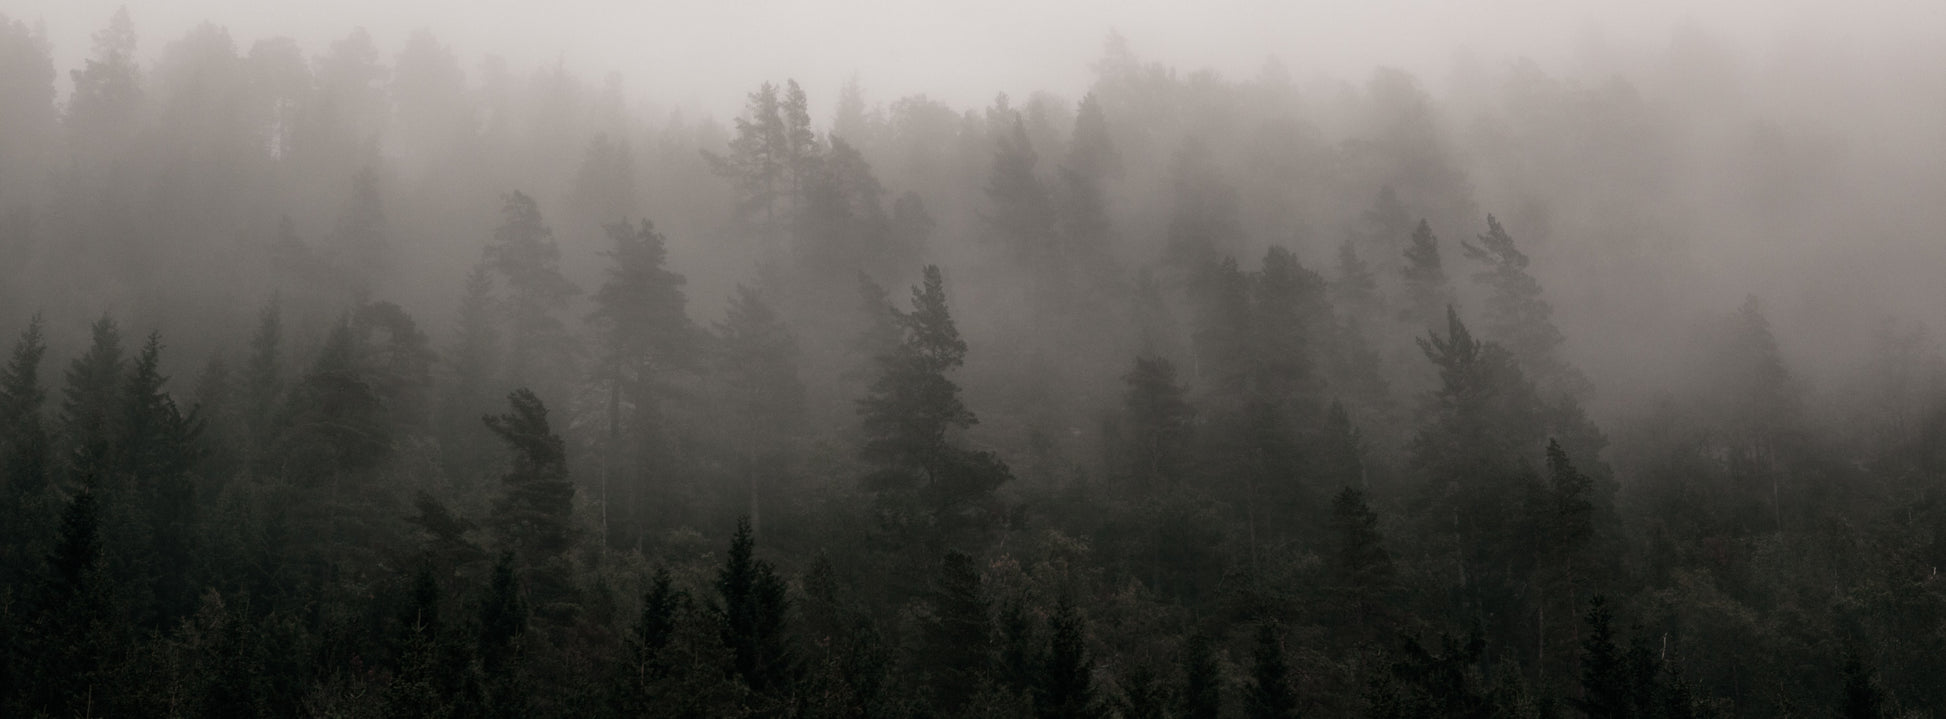 Trees in mist in Norway